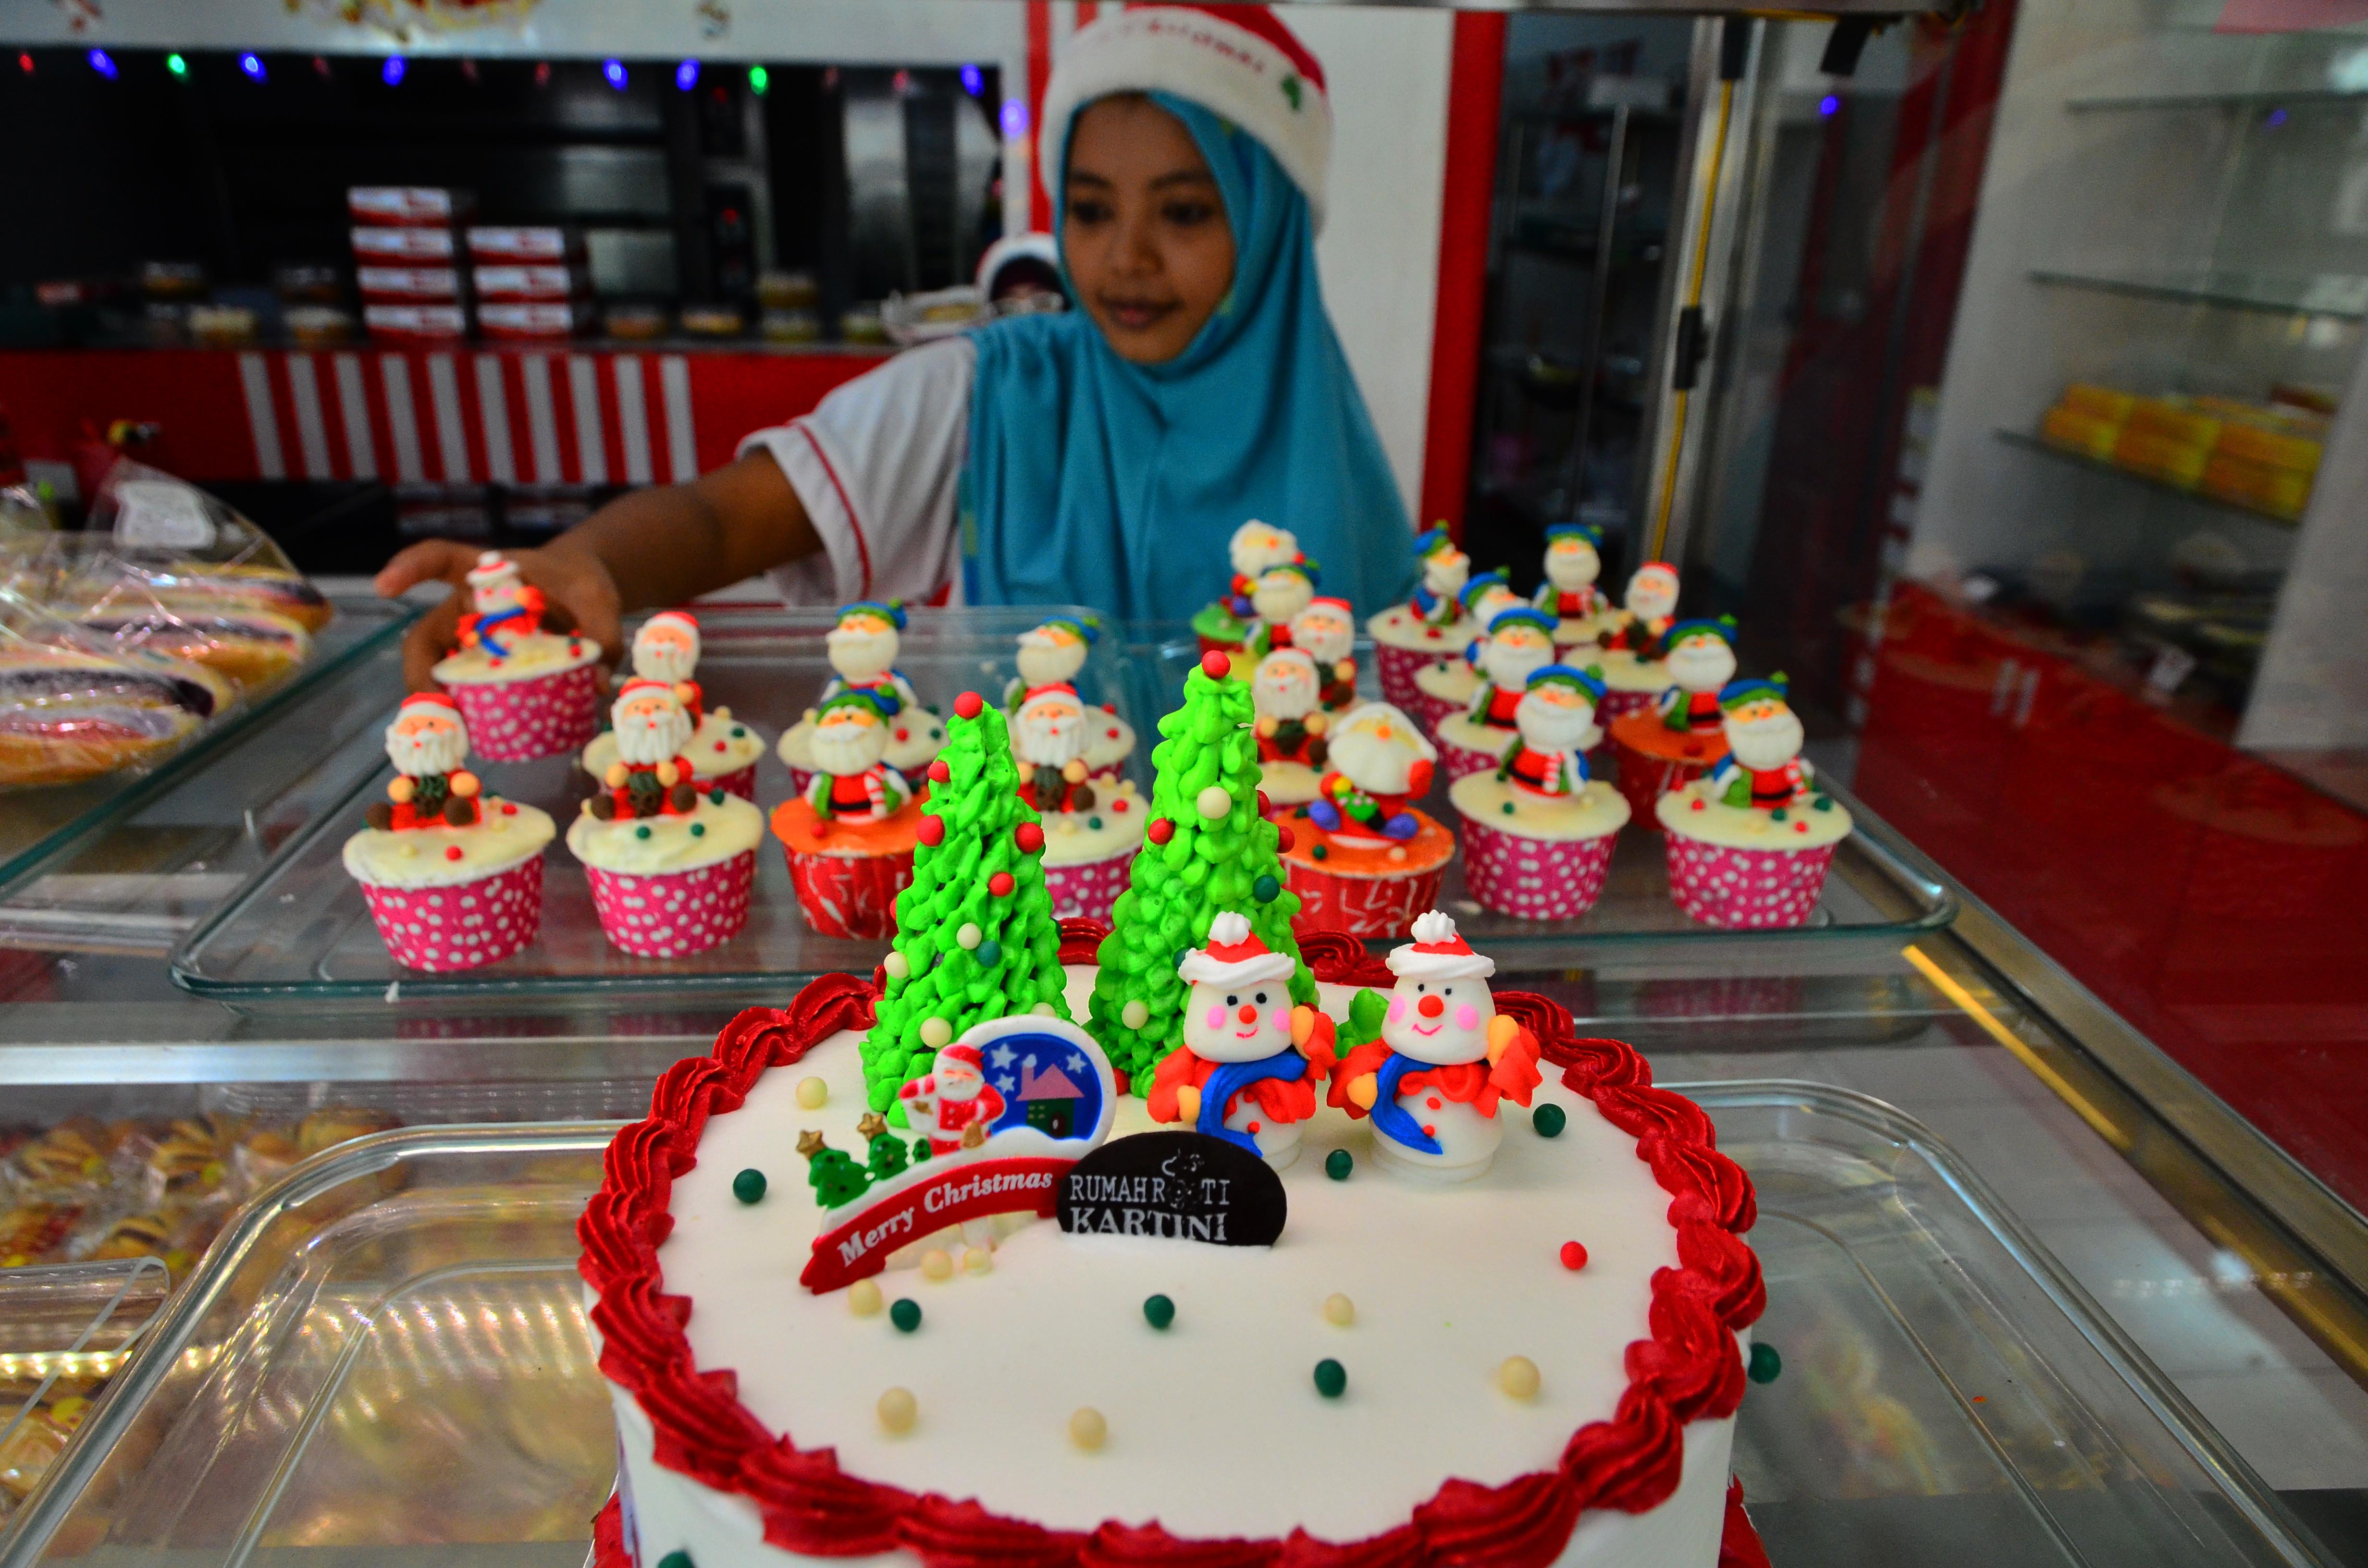 Perajin menata kue khas Natal di sentra pembuatan roti di Barongan, Kudus, Jawa Tengah, pada 23 Desember 2015. Foto oleh Yusuf Nugroho/Antara 